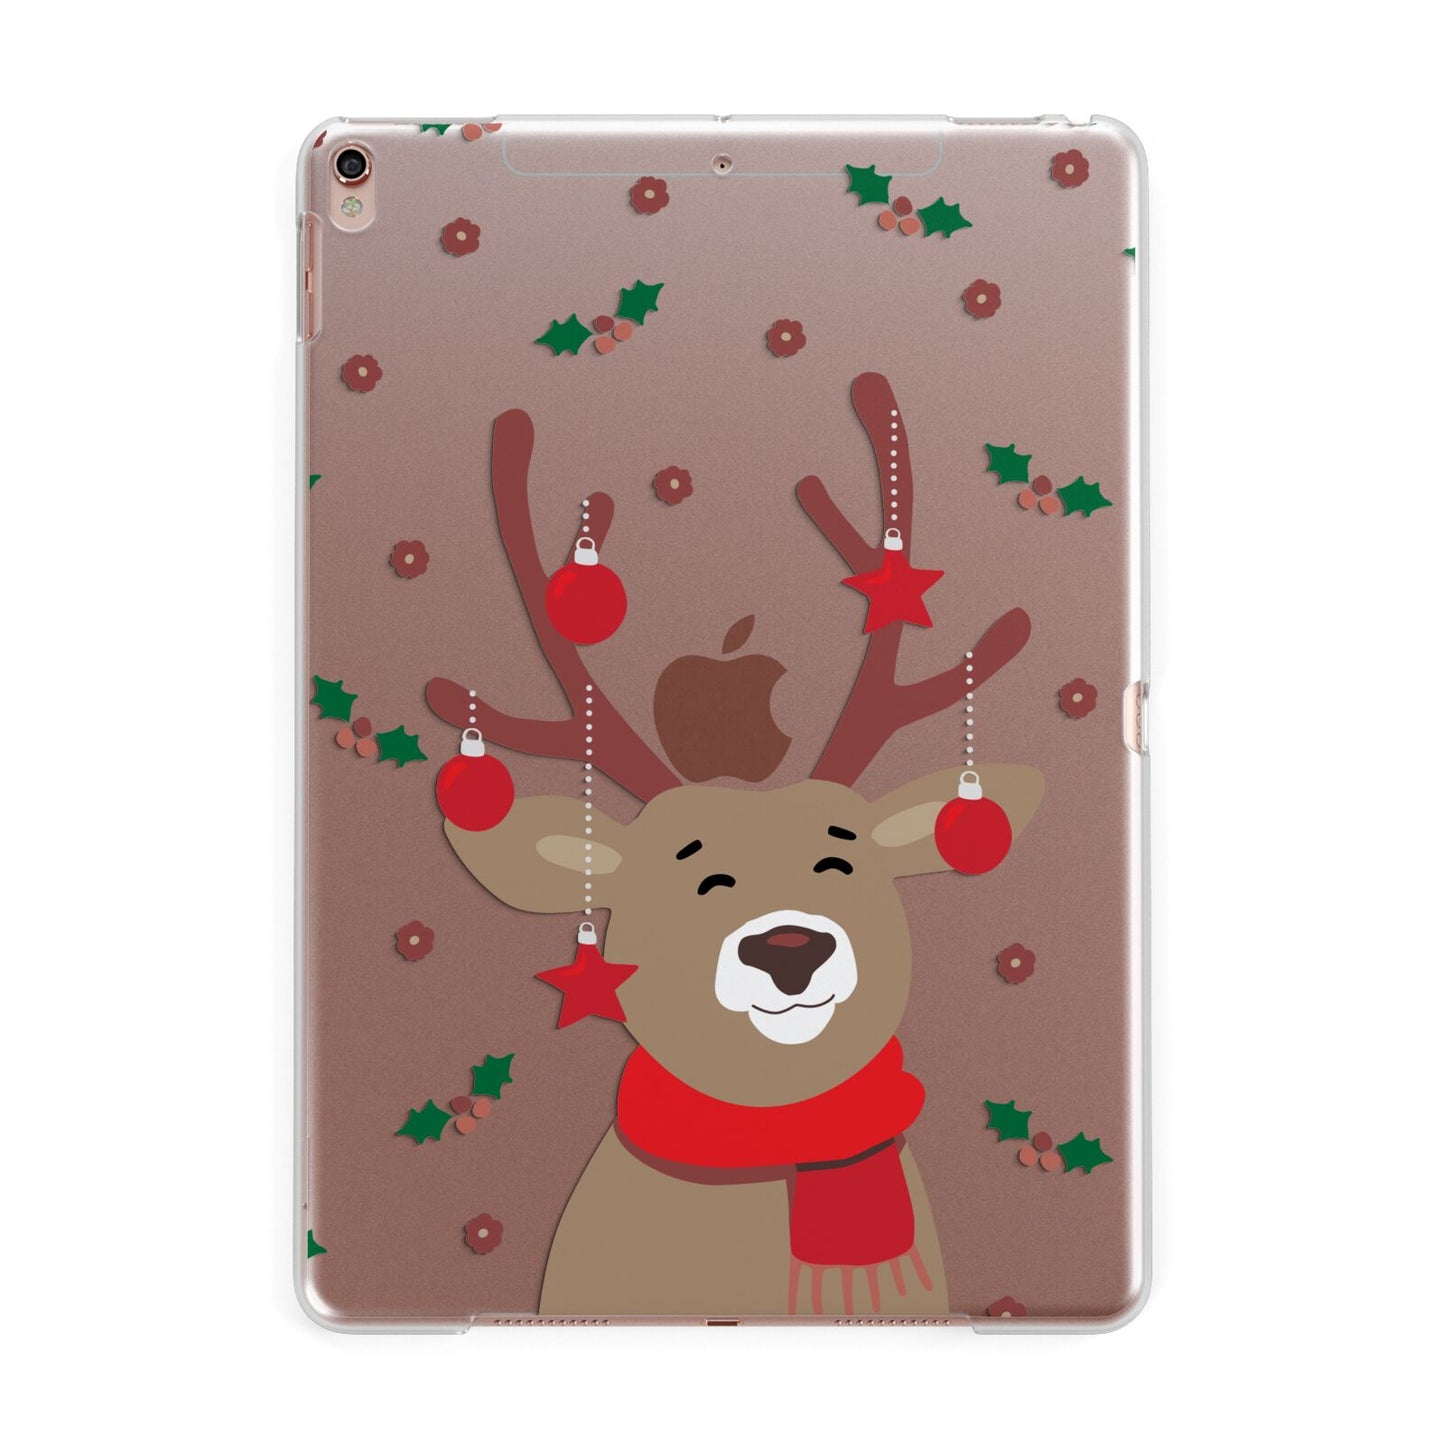 Reindeer Christmas Apple iPad Rose Gold Case